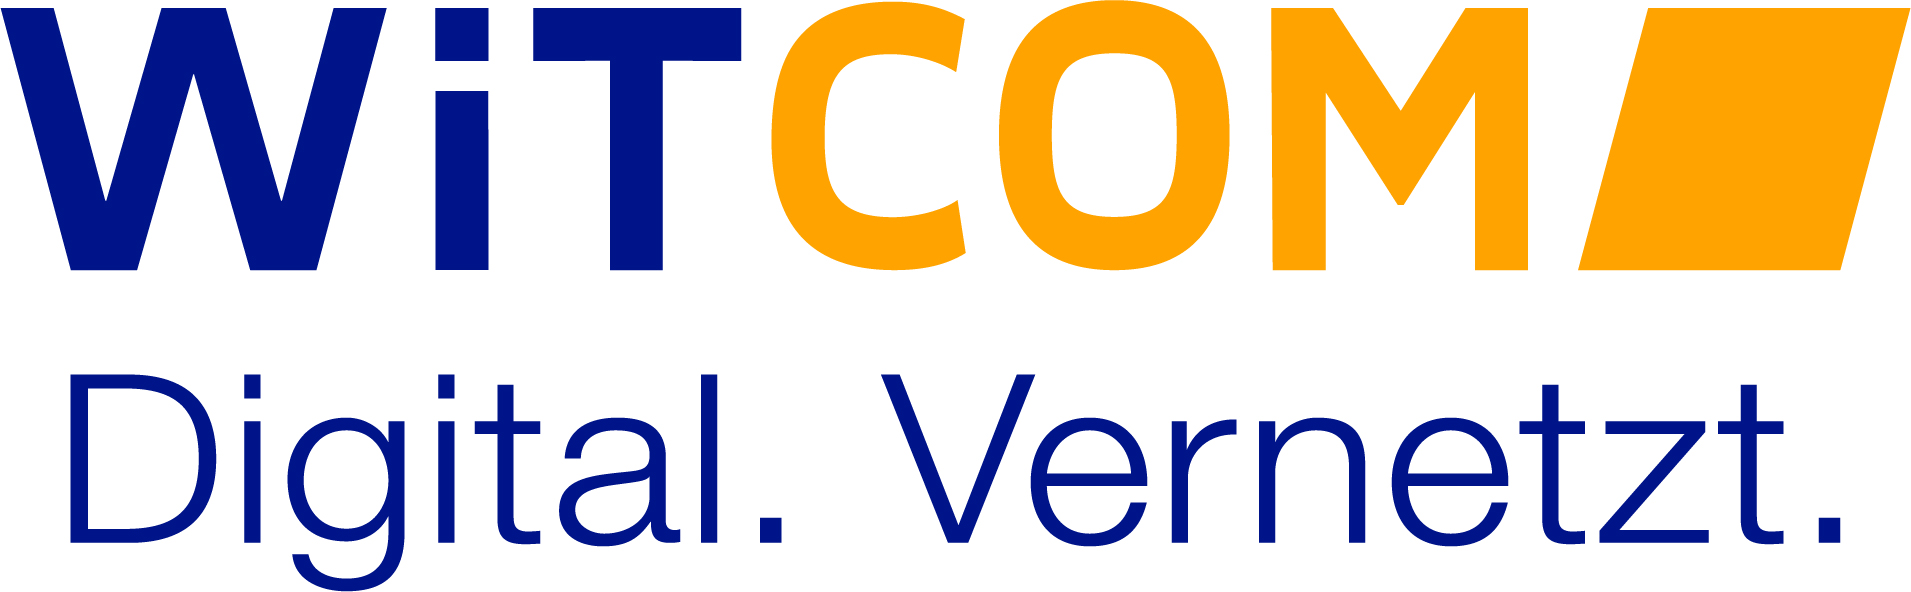 WiTCOM Wiesbadener Informations- und Telekommunikations GmbH